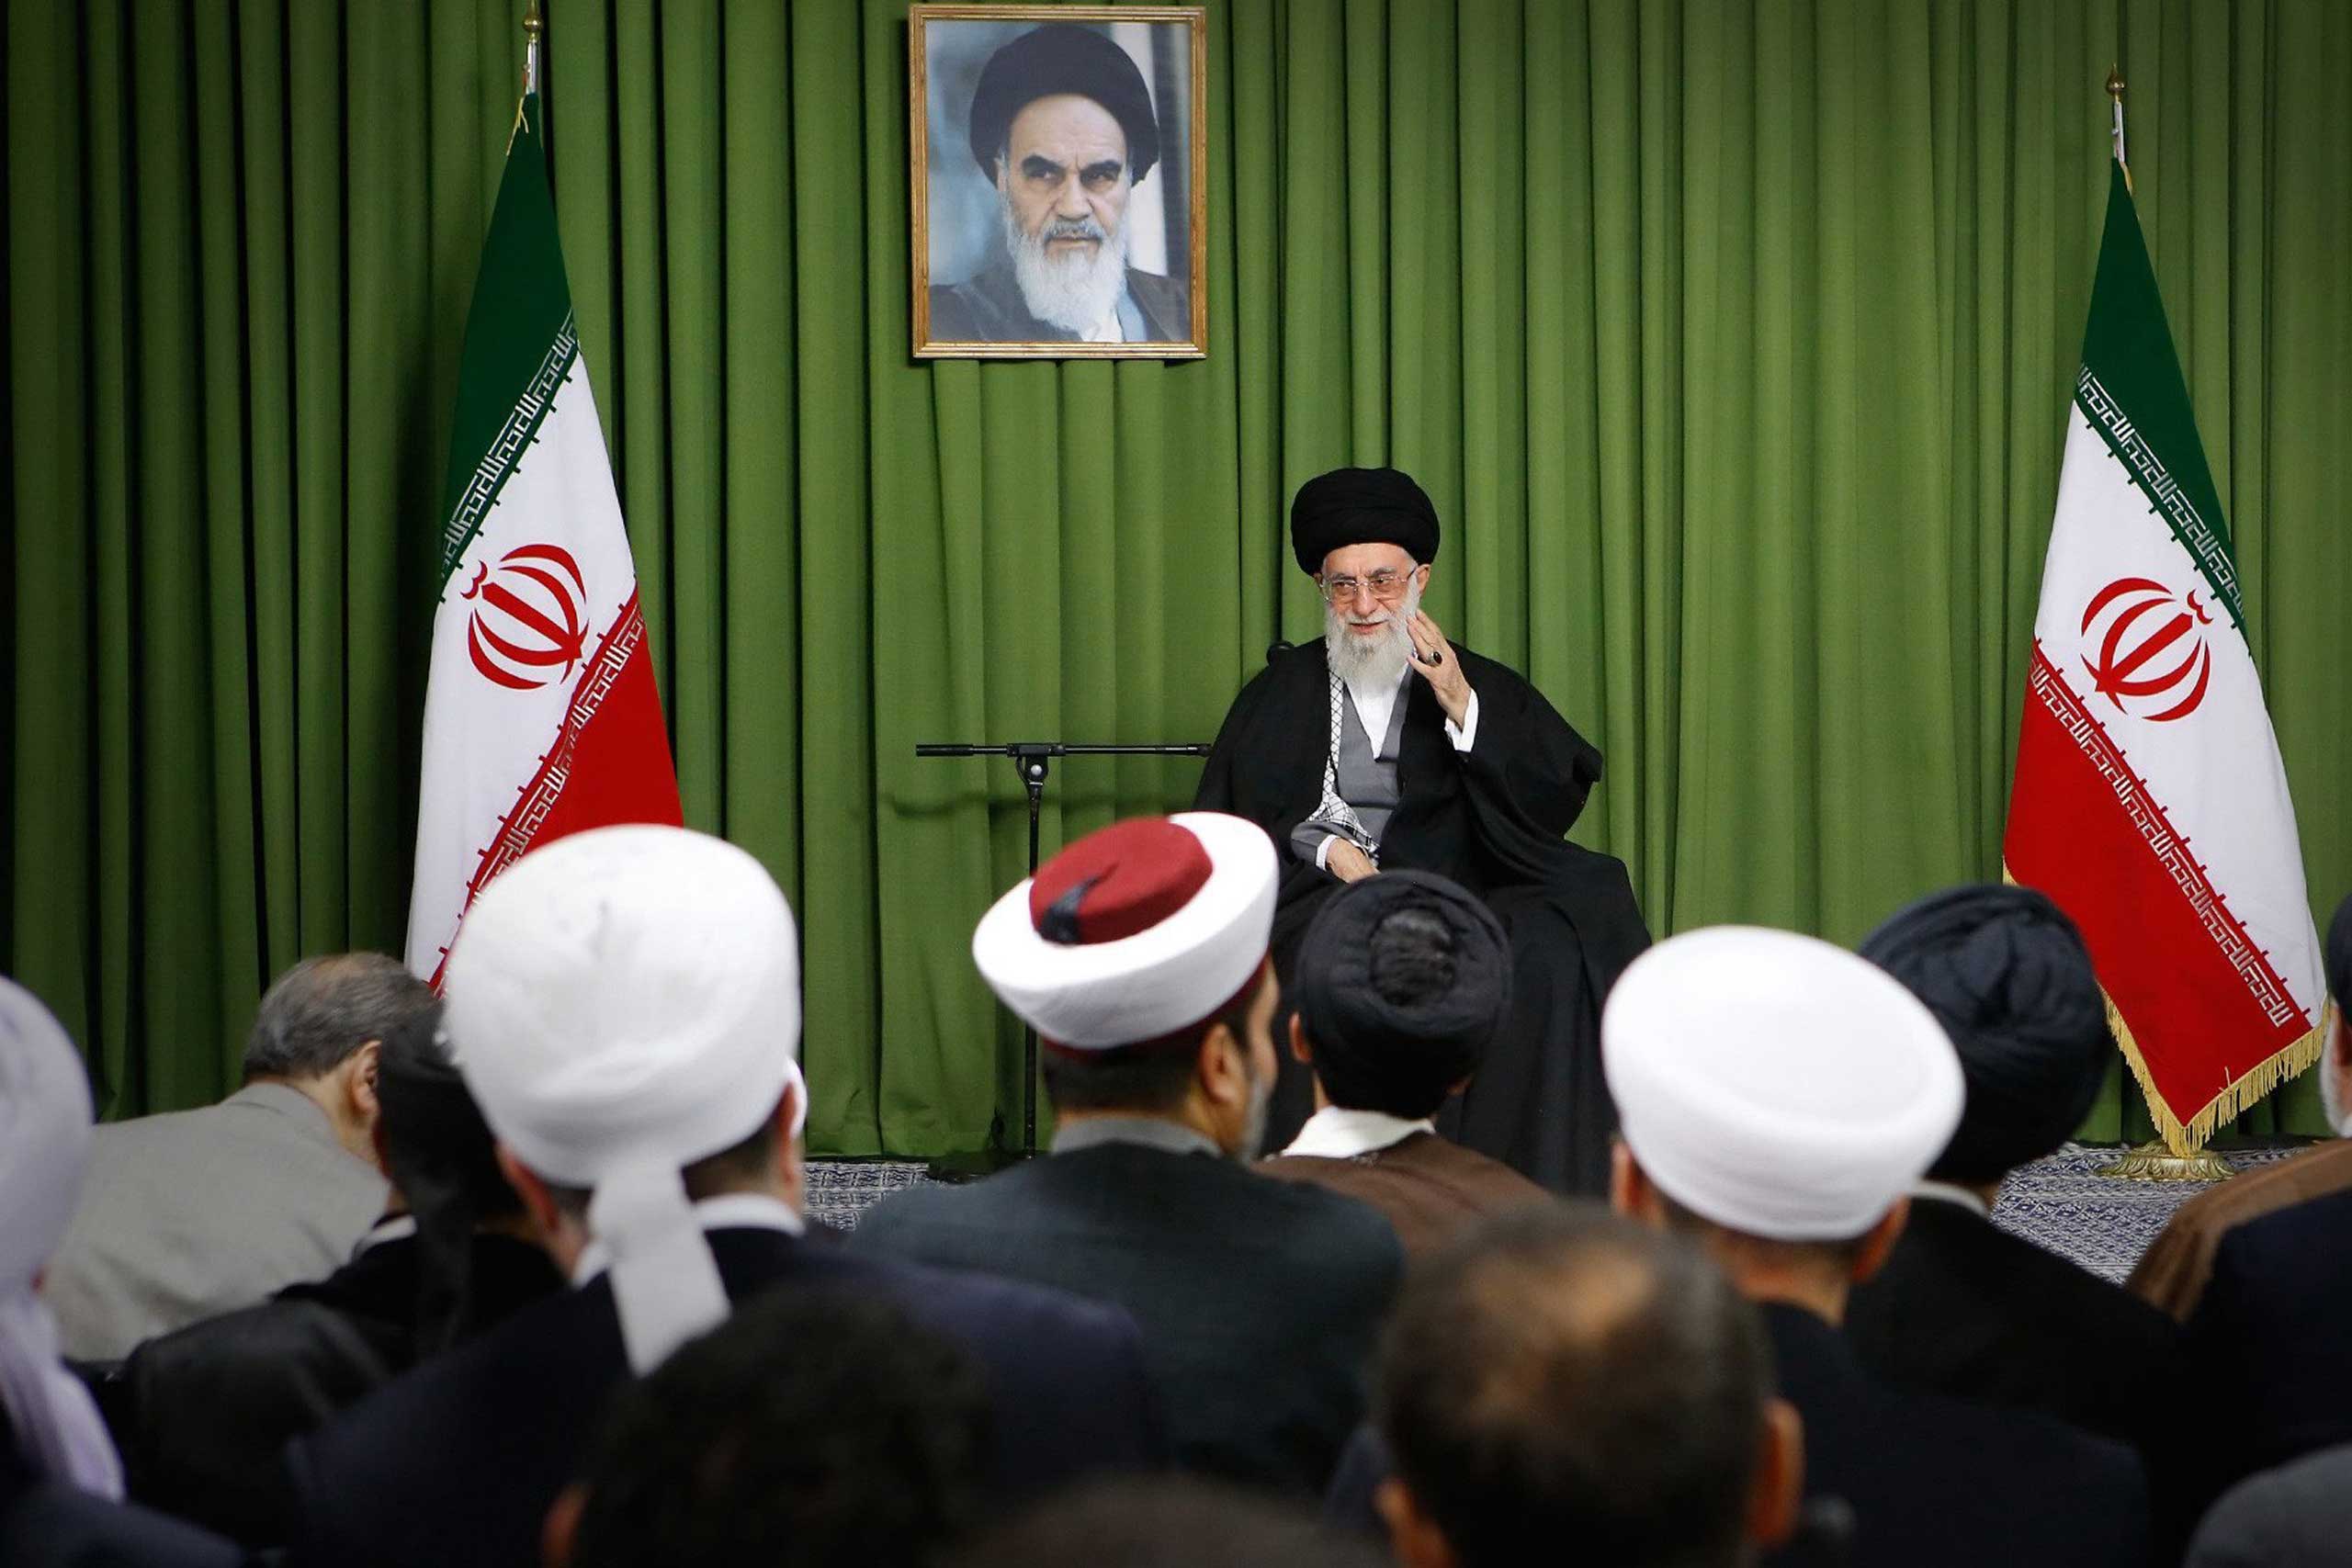 Supreme leader Ayatollah Ali Khamenei speaks during a ceremony in Tehran, Nov. 25, 2014. (EPA)